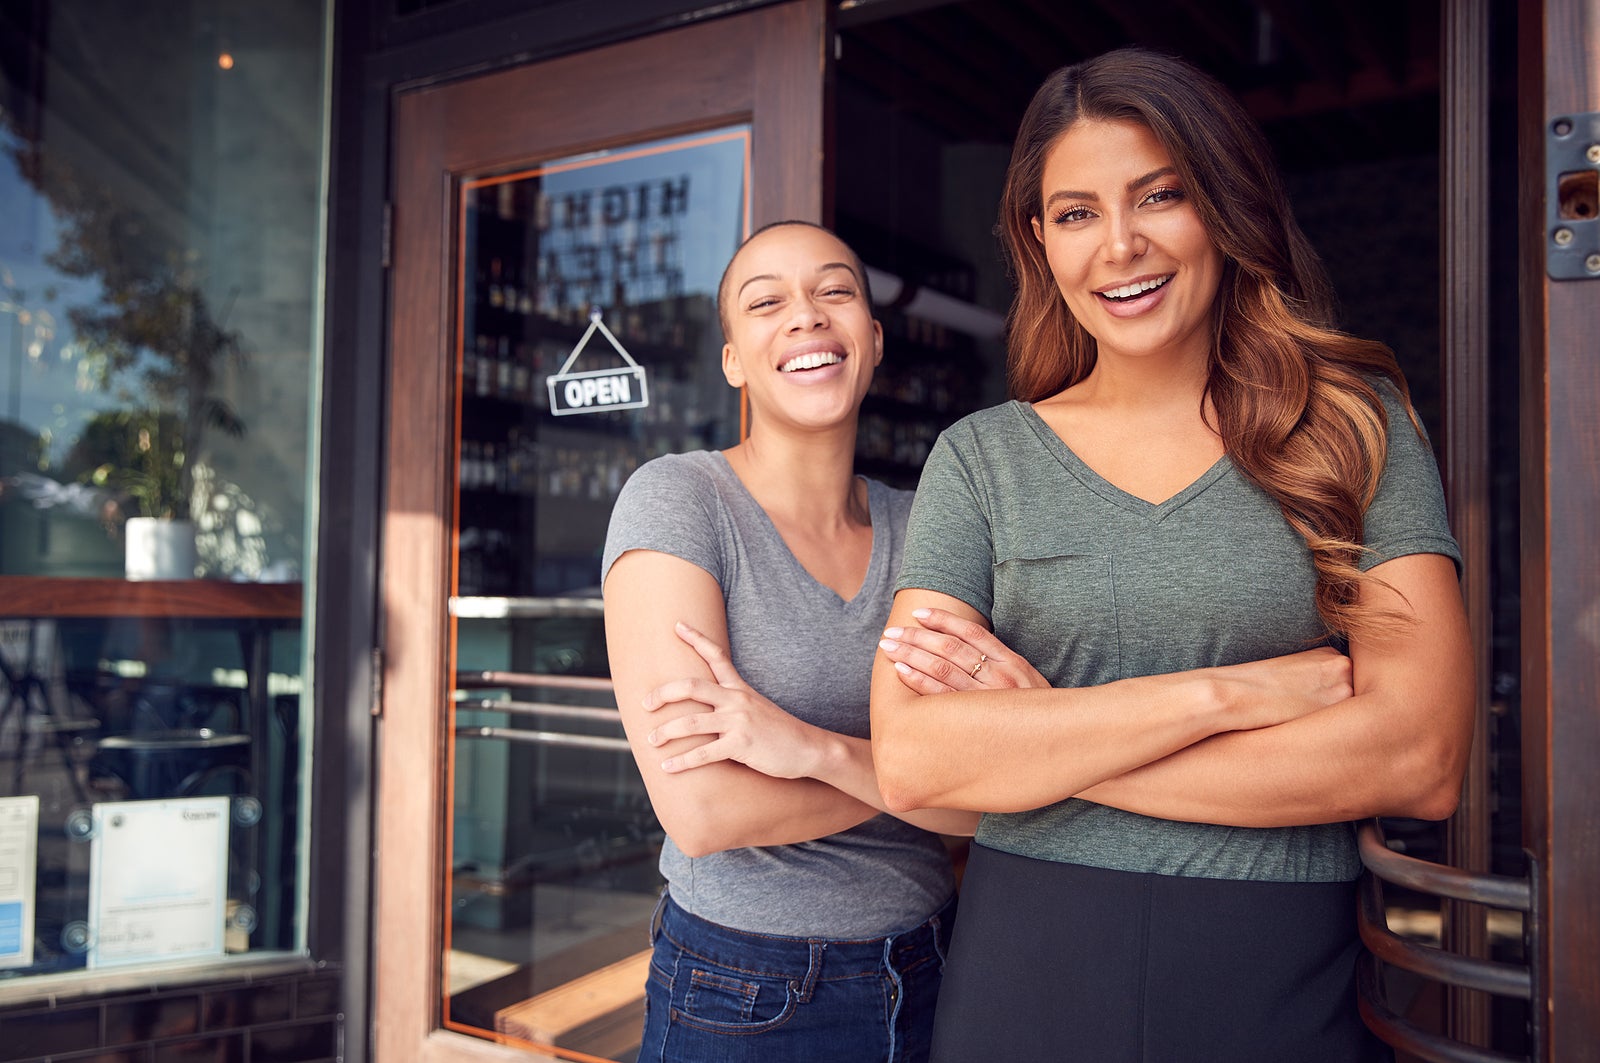 Portrait Of Two Women Starting New Coffee Shop Or Restaurant Business Standing In Doorway